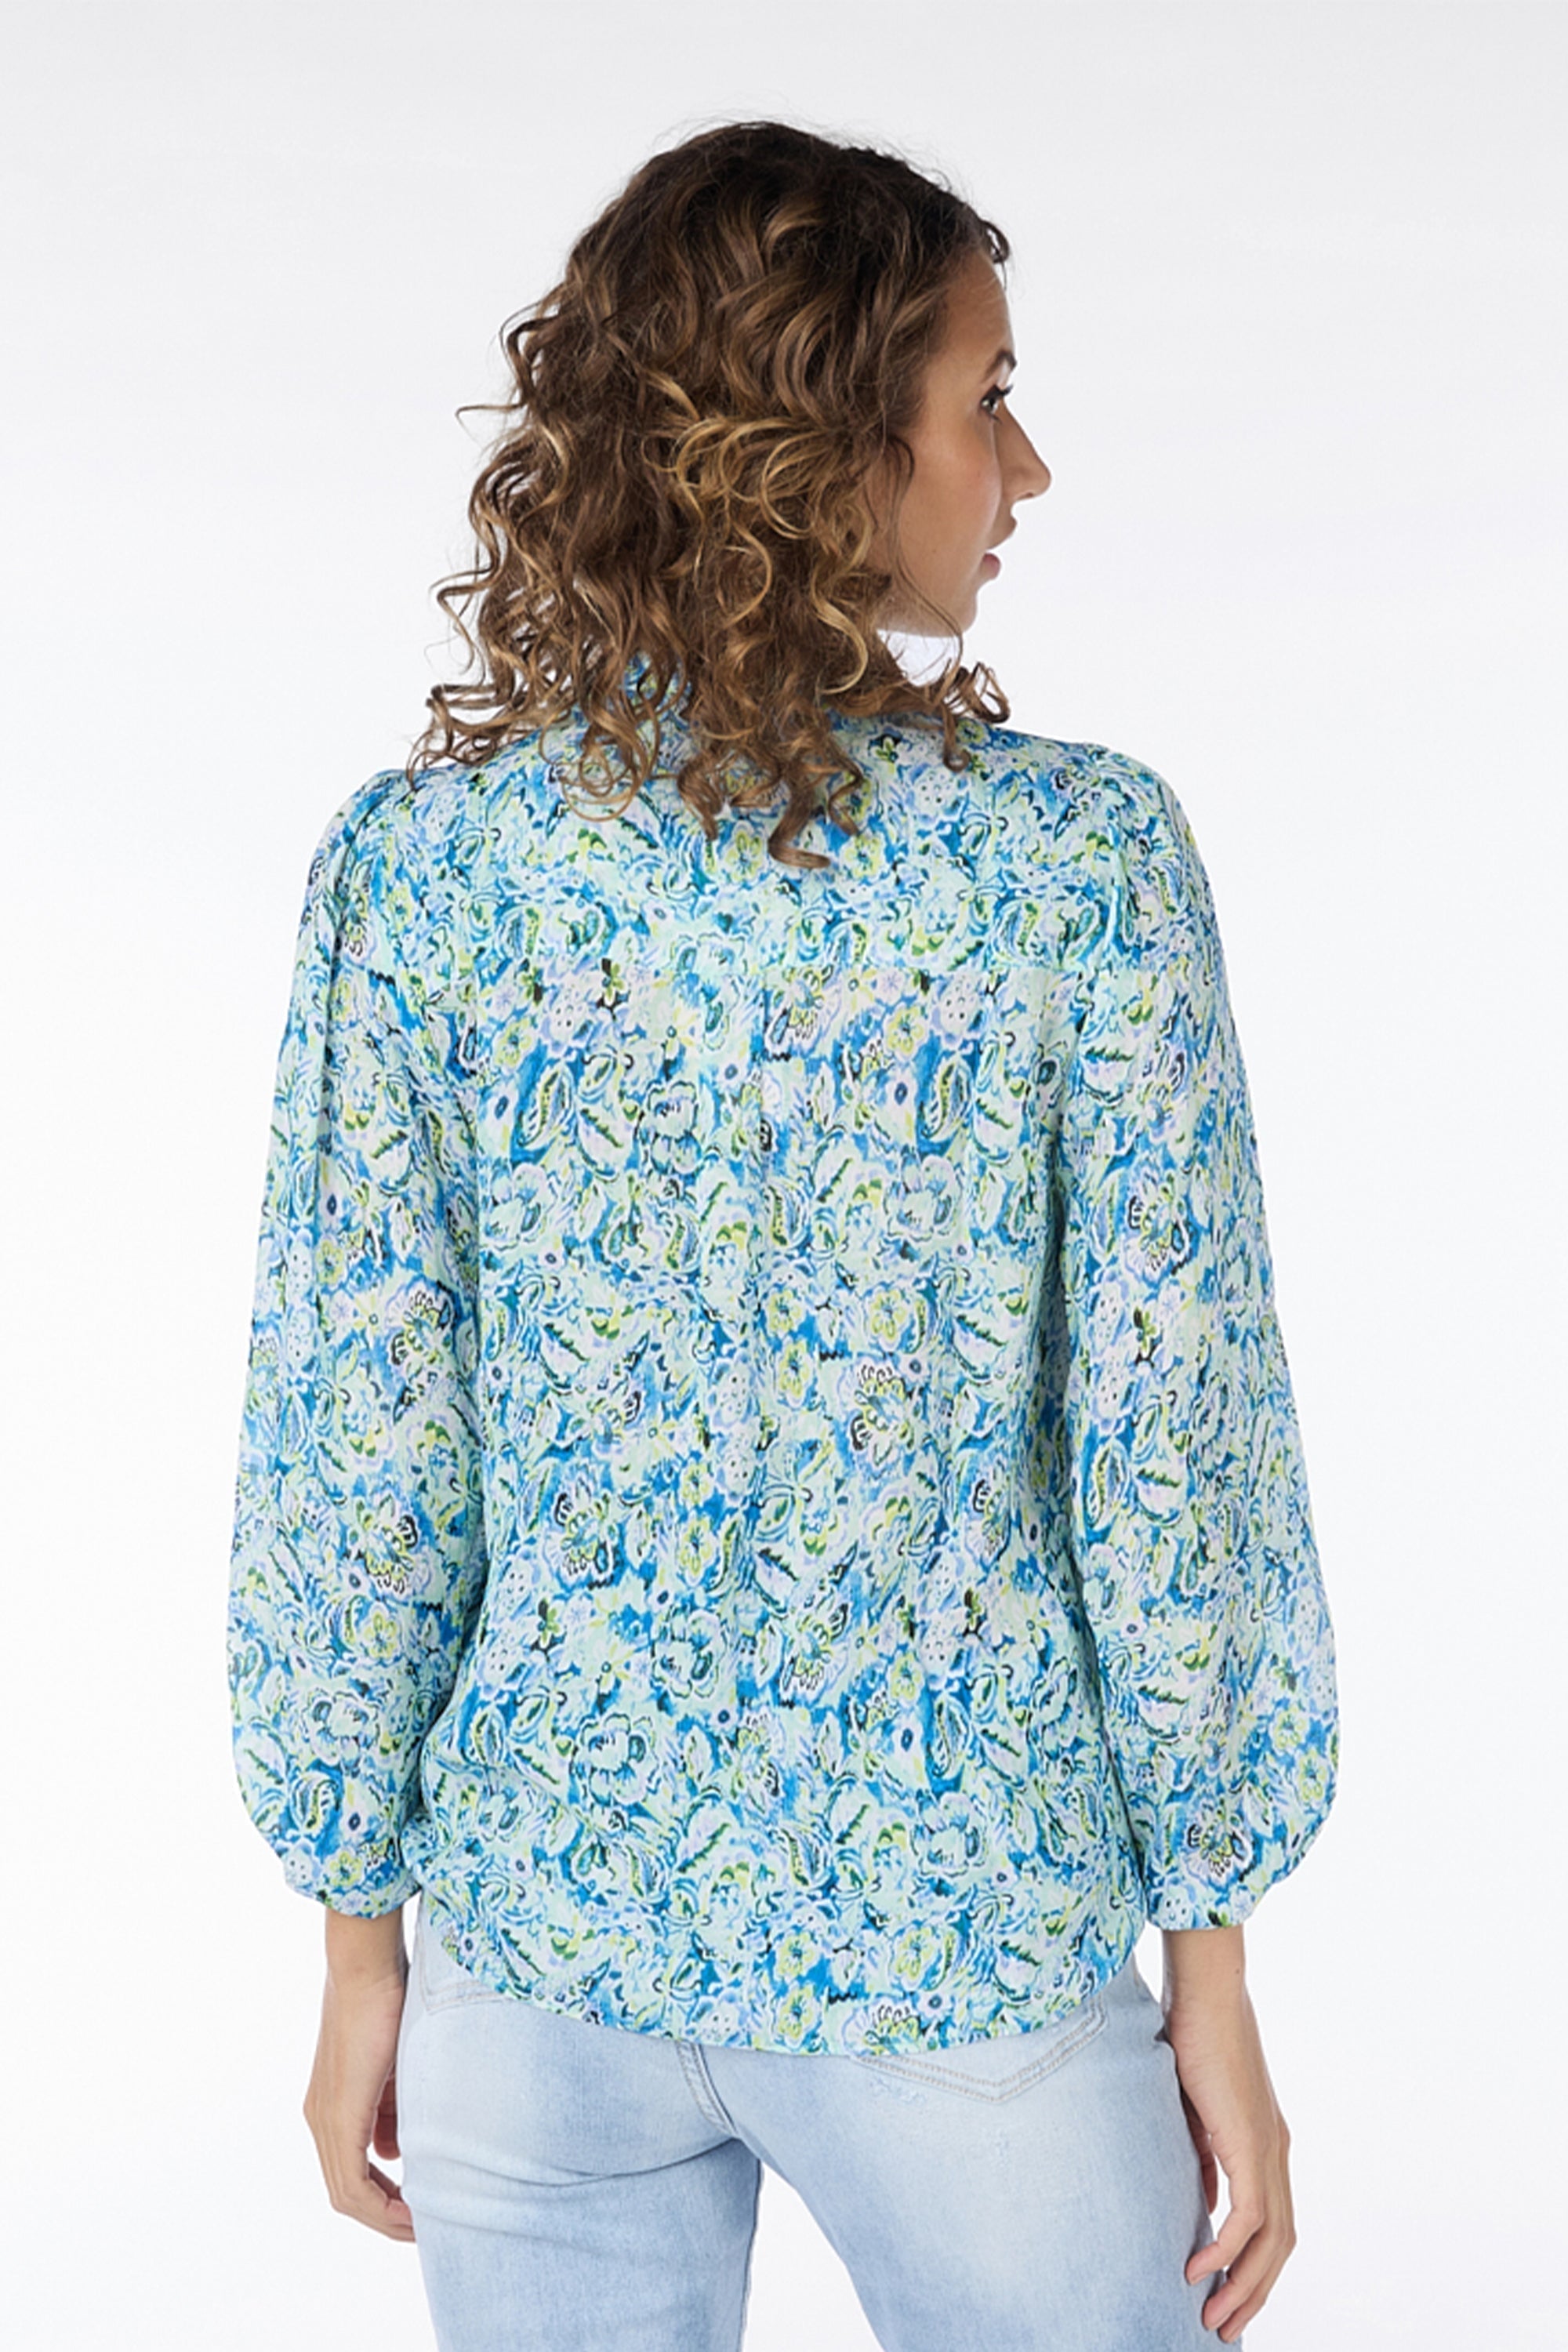 Back view of Esqualo (SP2415005) Women's 3/4 Sleeve Blue Floral Button Up Blouse